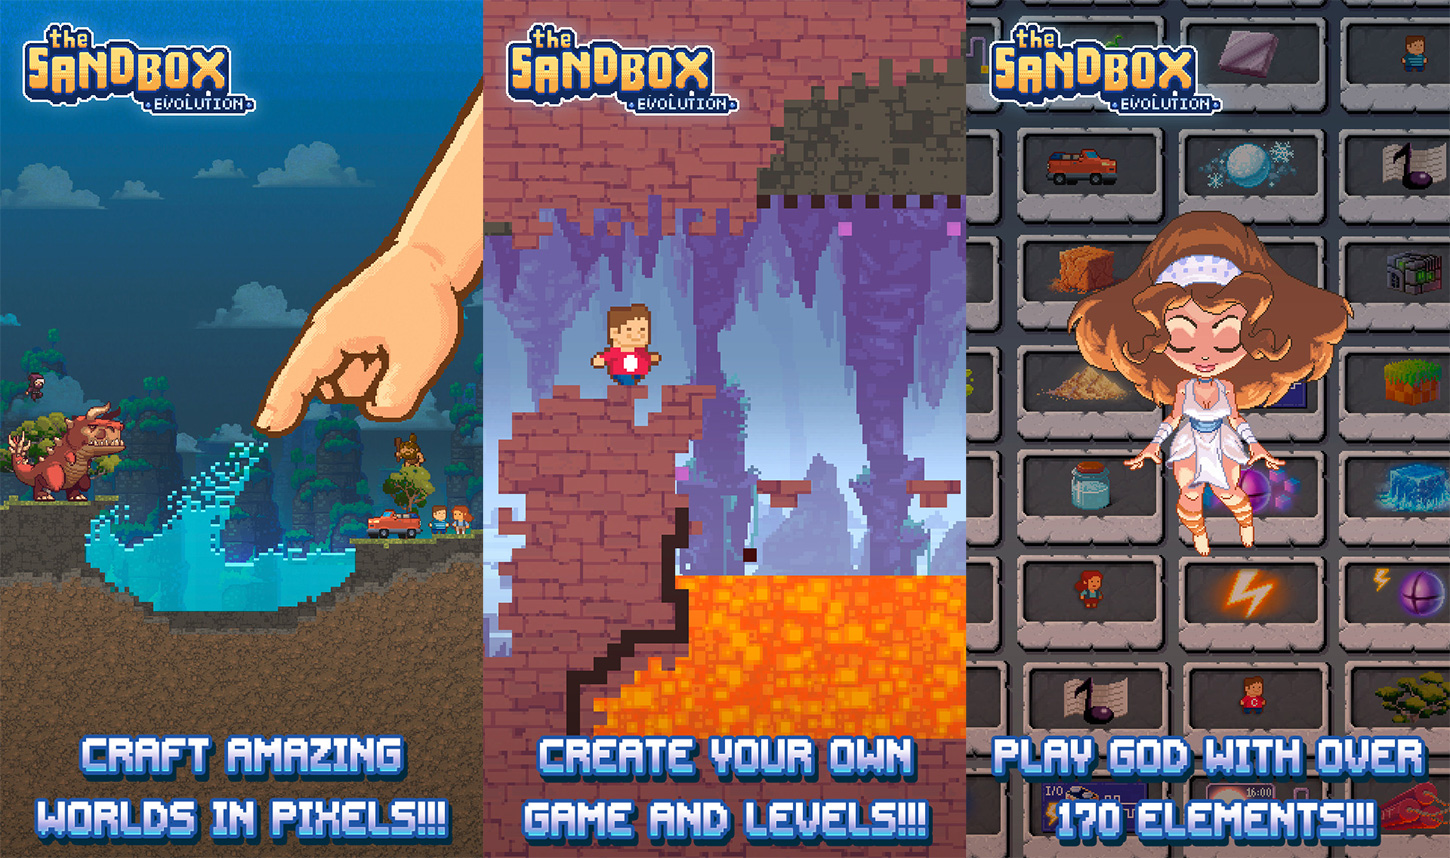 The Sandbox Evolution Screenshots